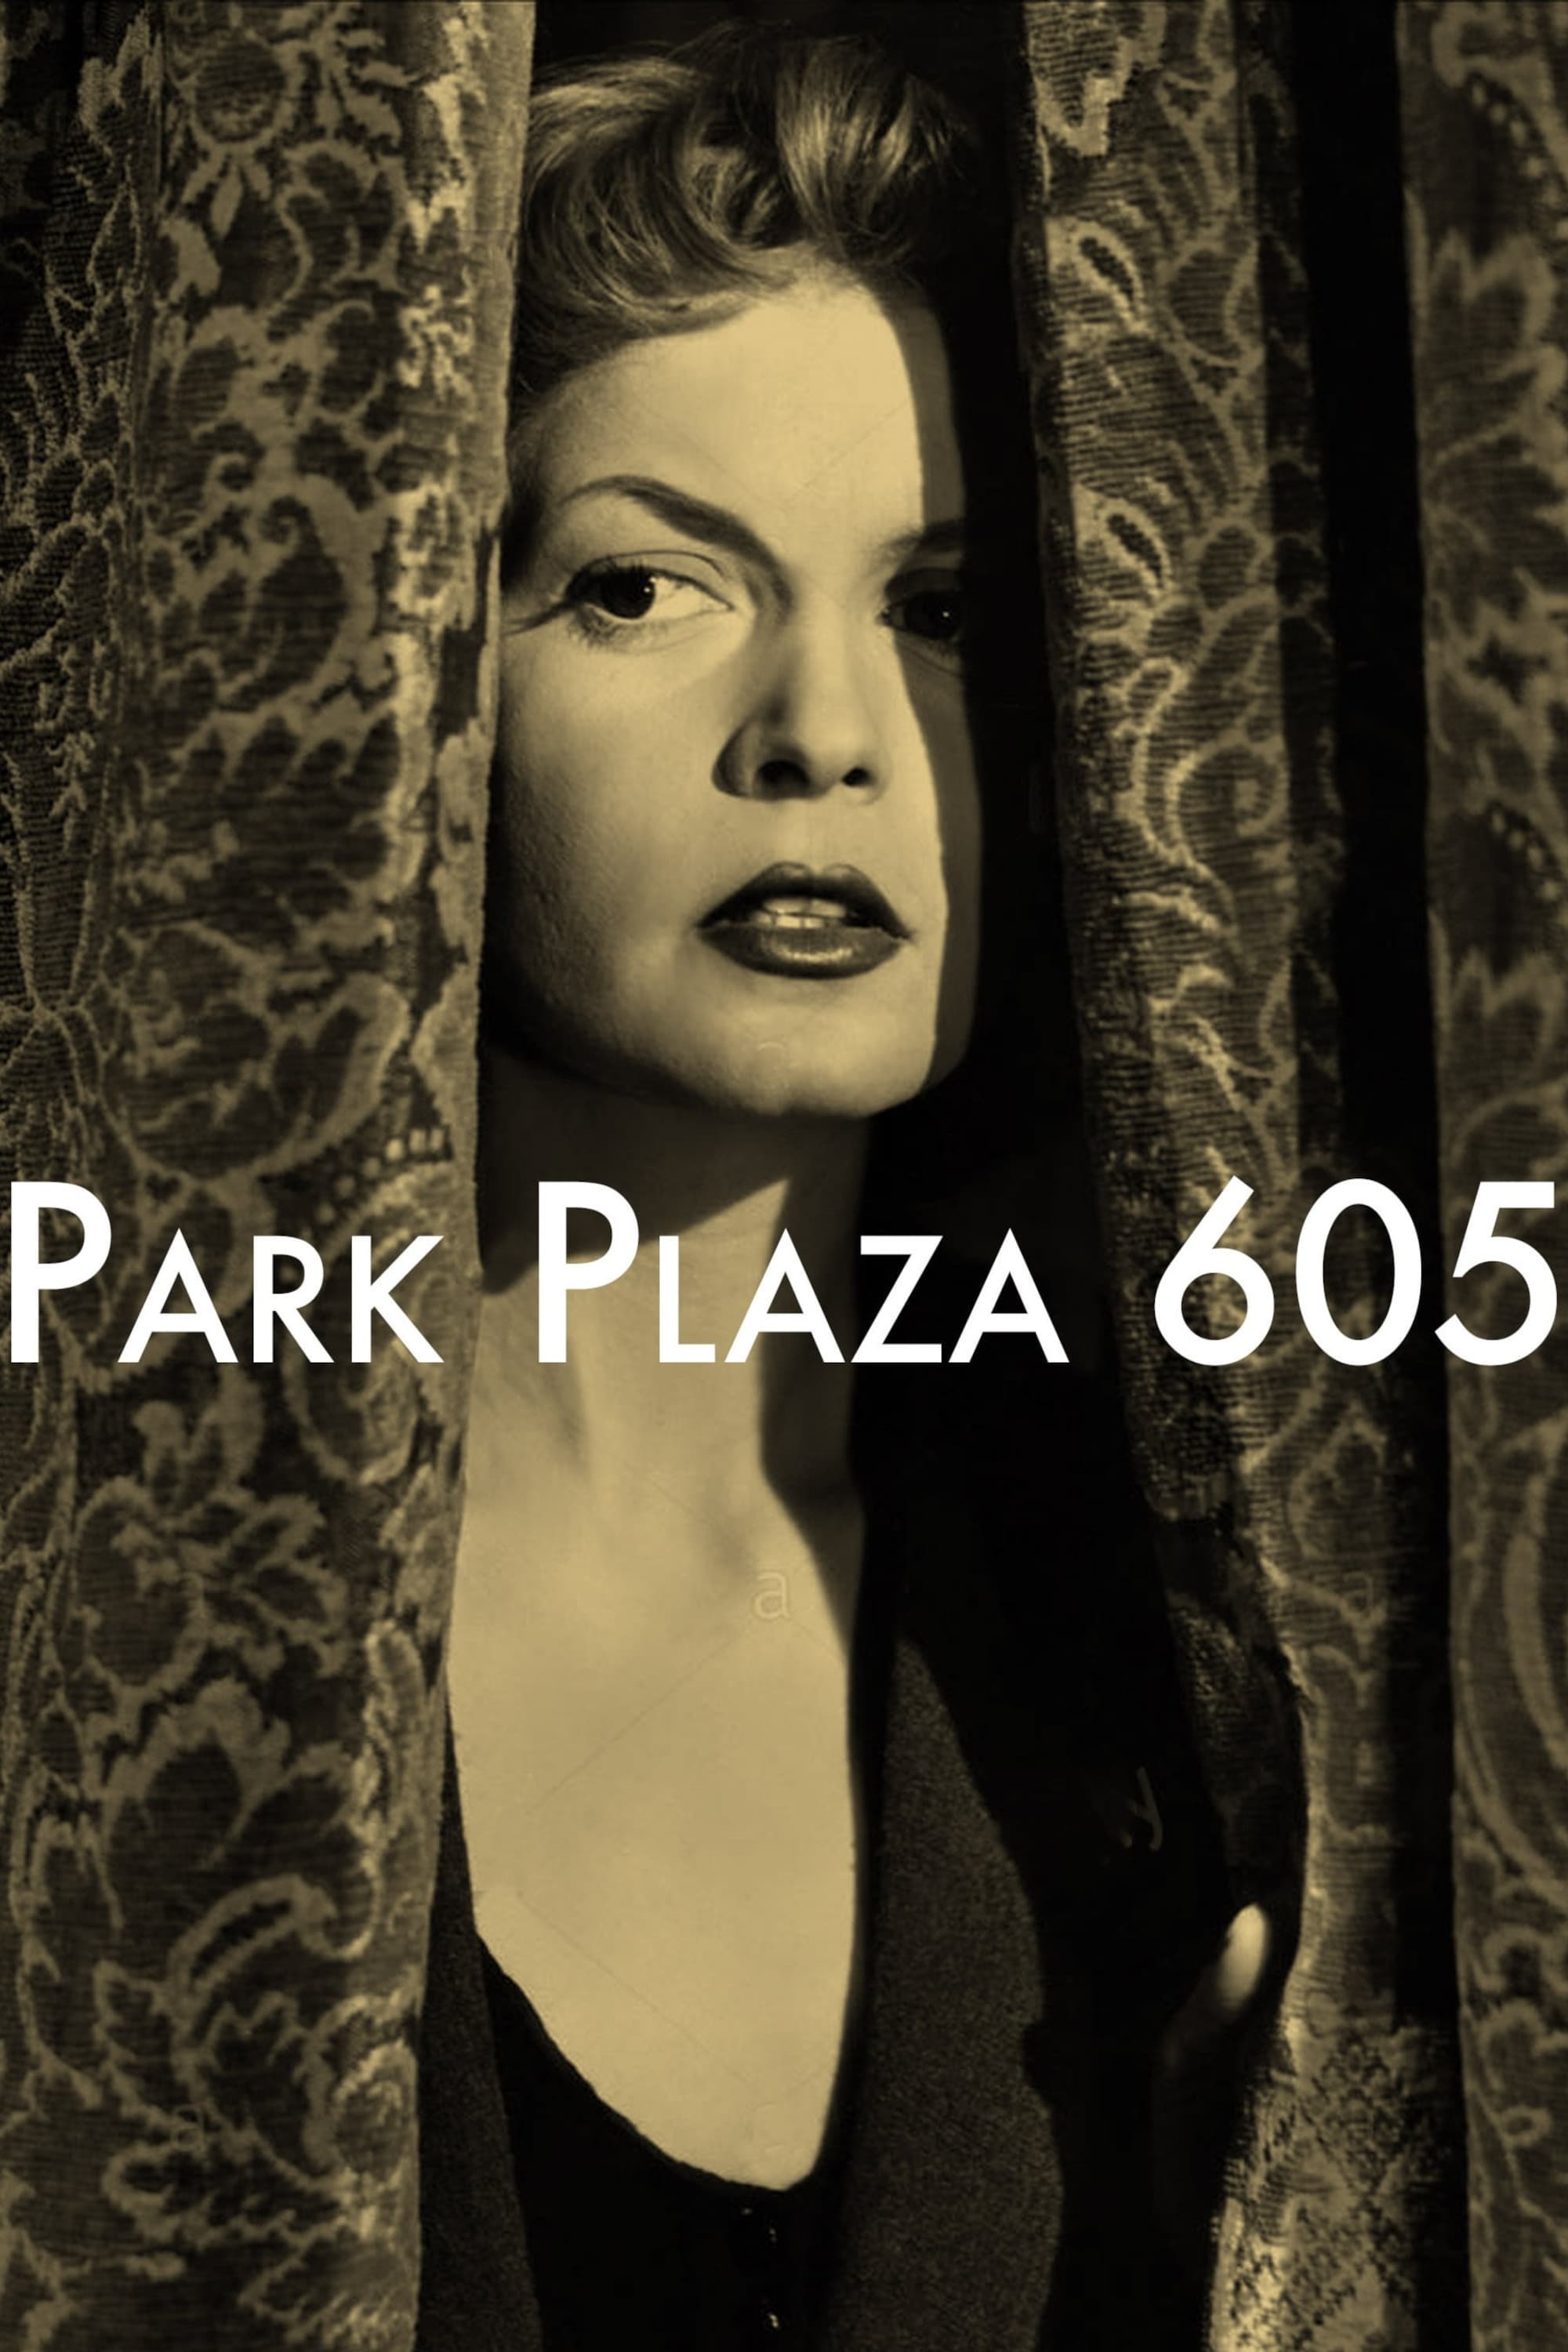 Park Plaza 605 (1953)